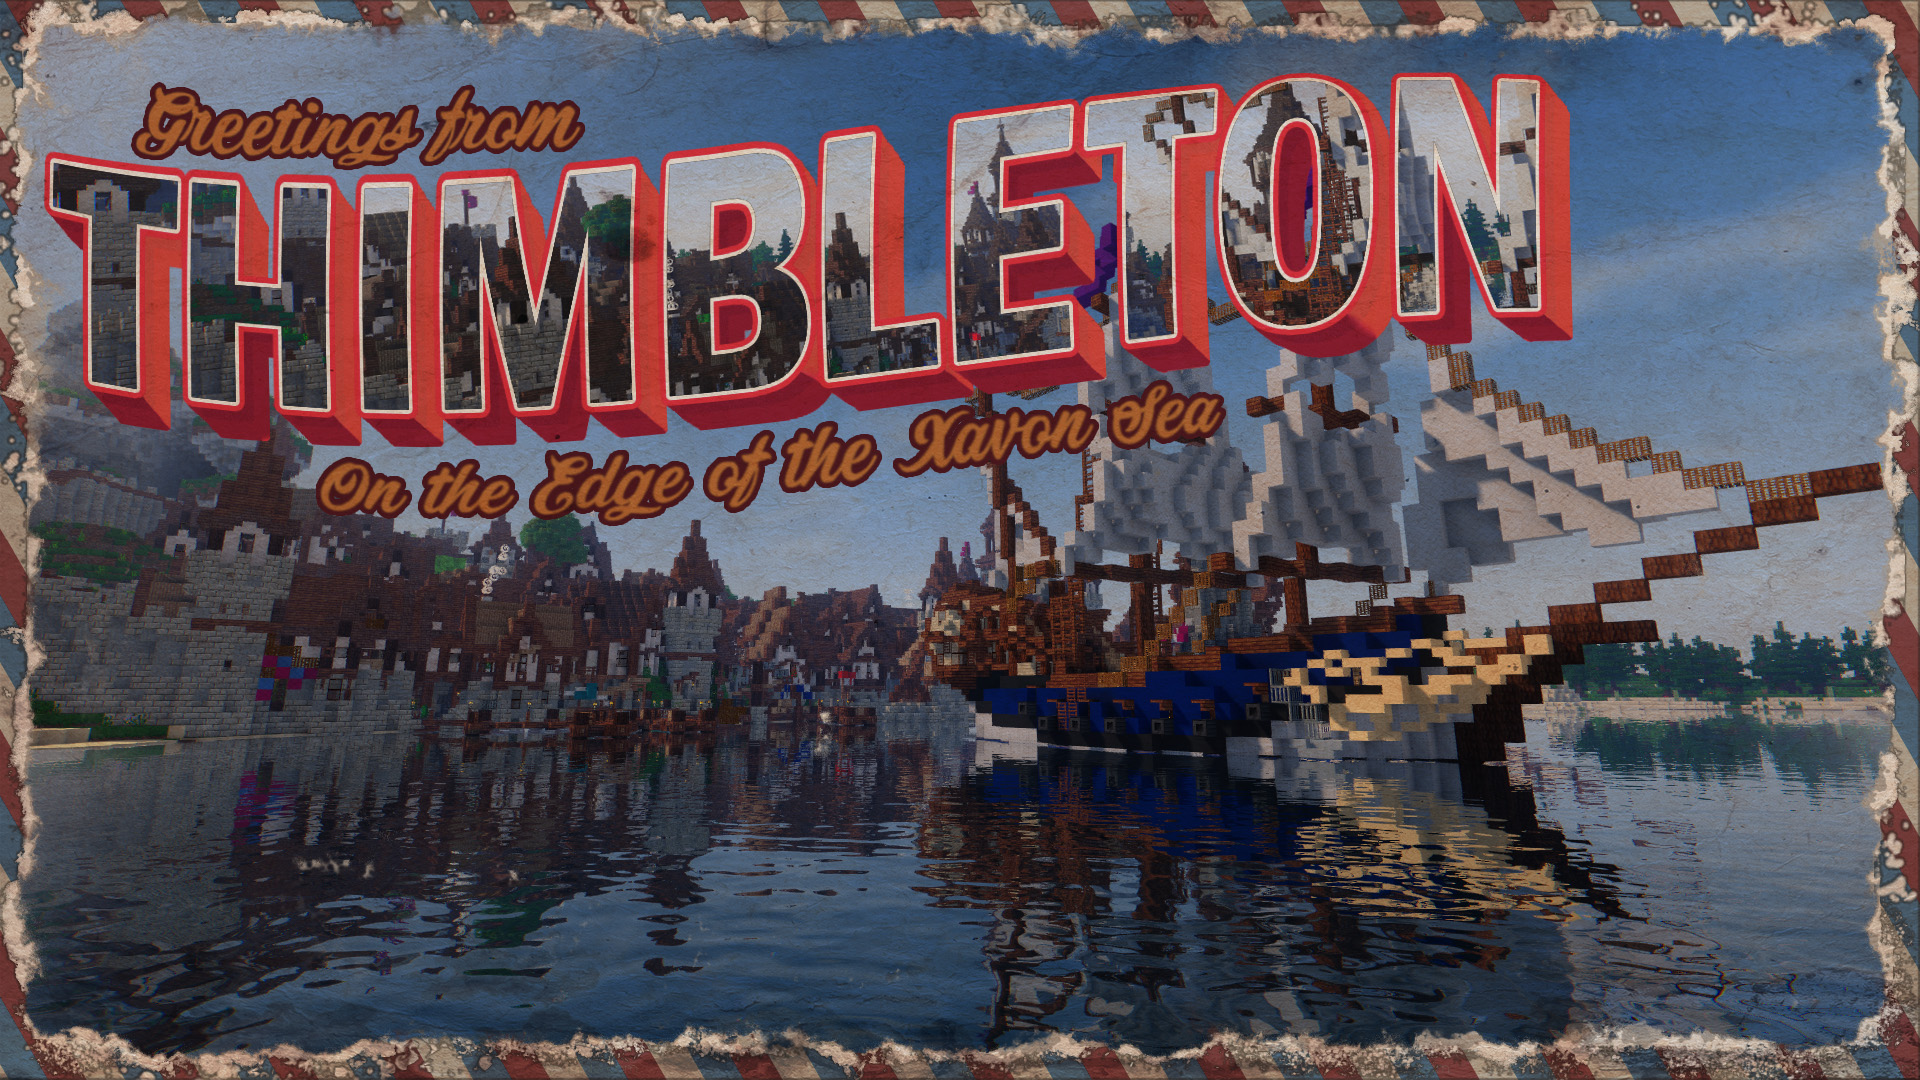 Thimbleton